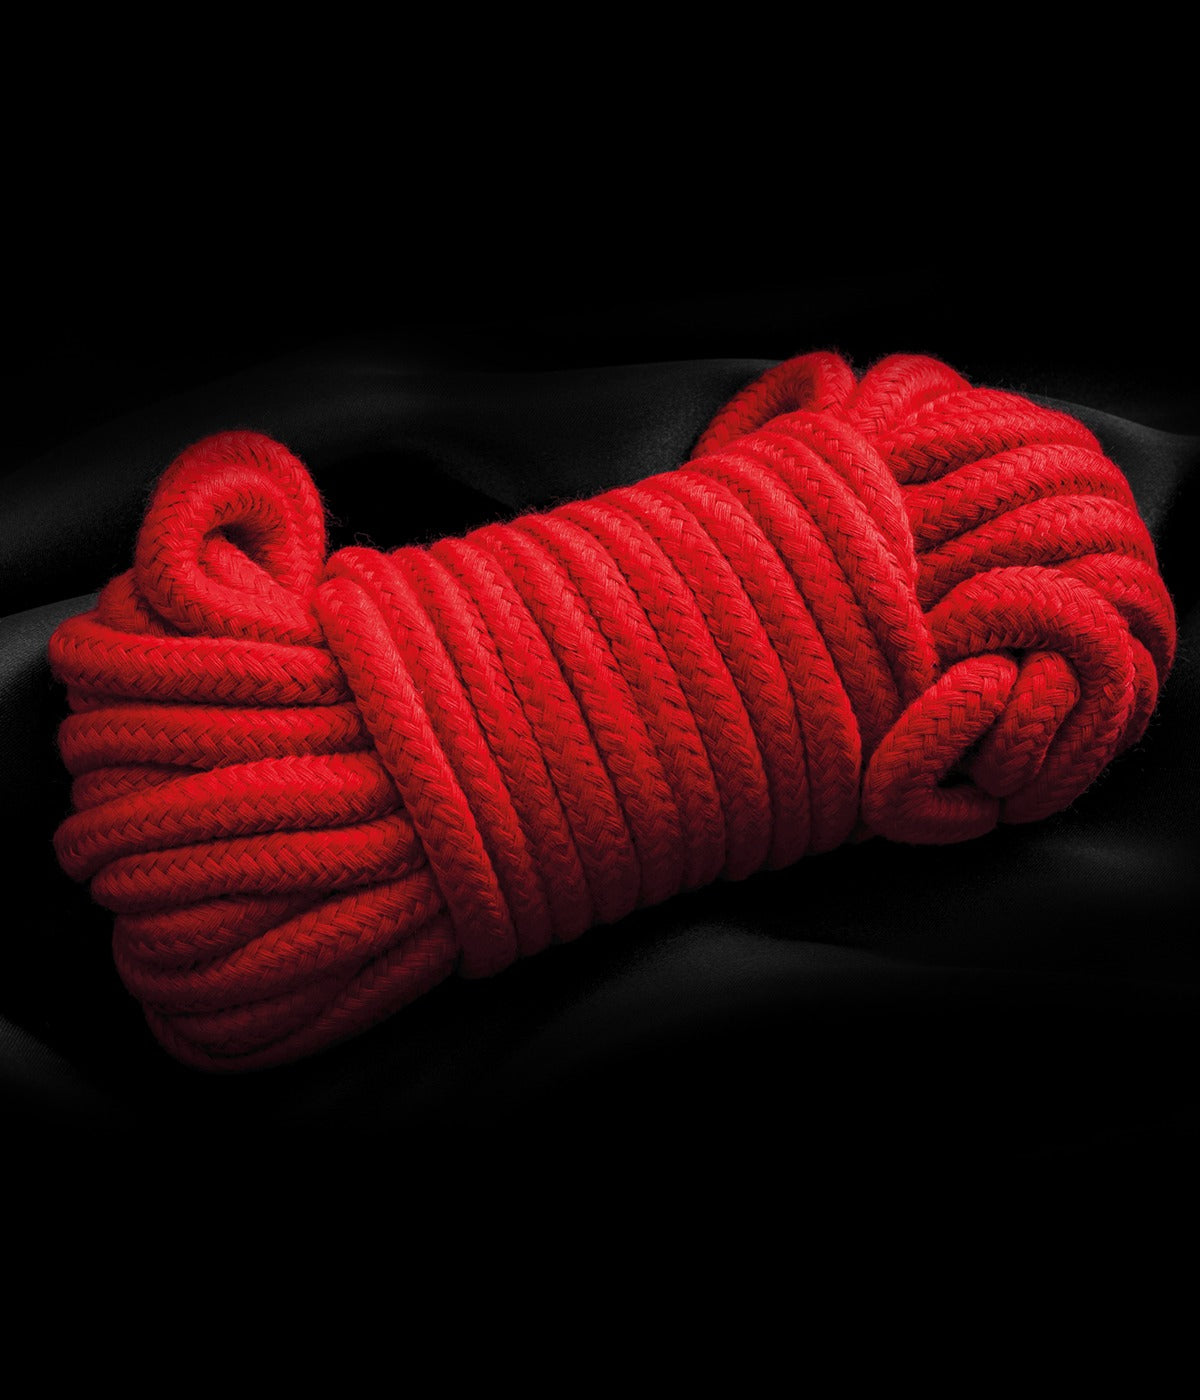 MVW Fetish Dreams Bondage Rope - 5 Meter - Red